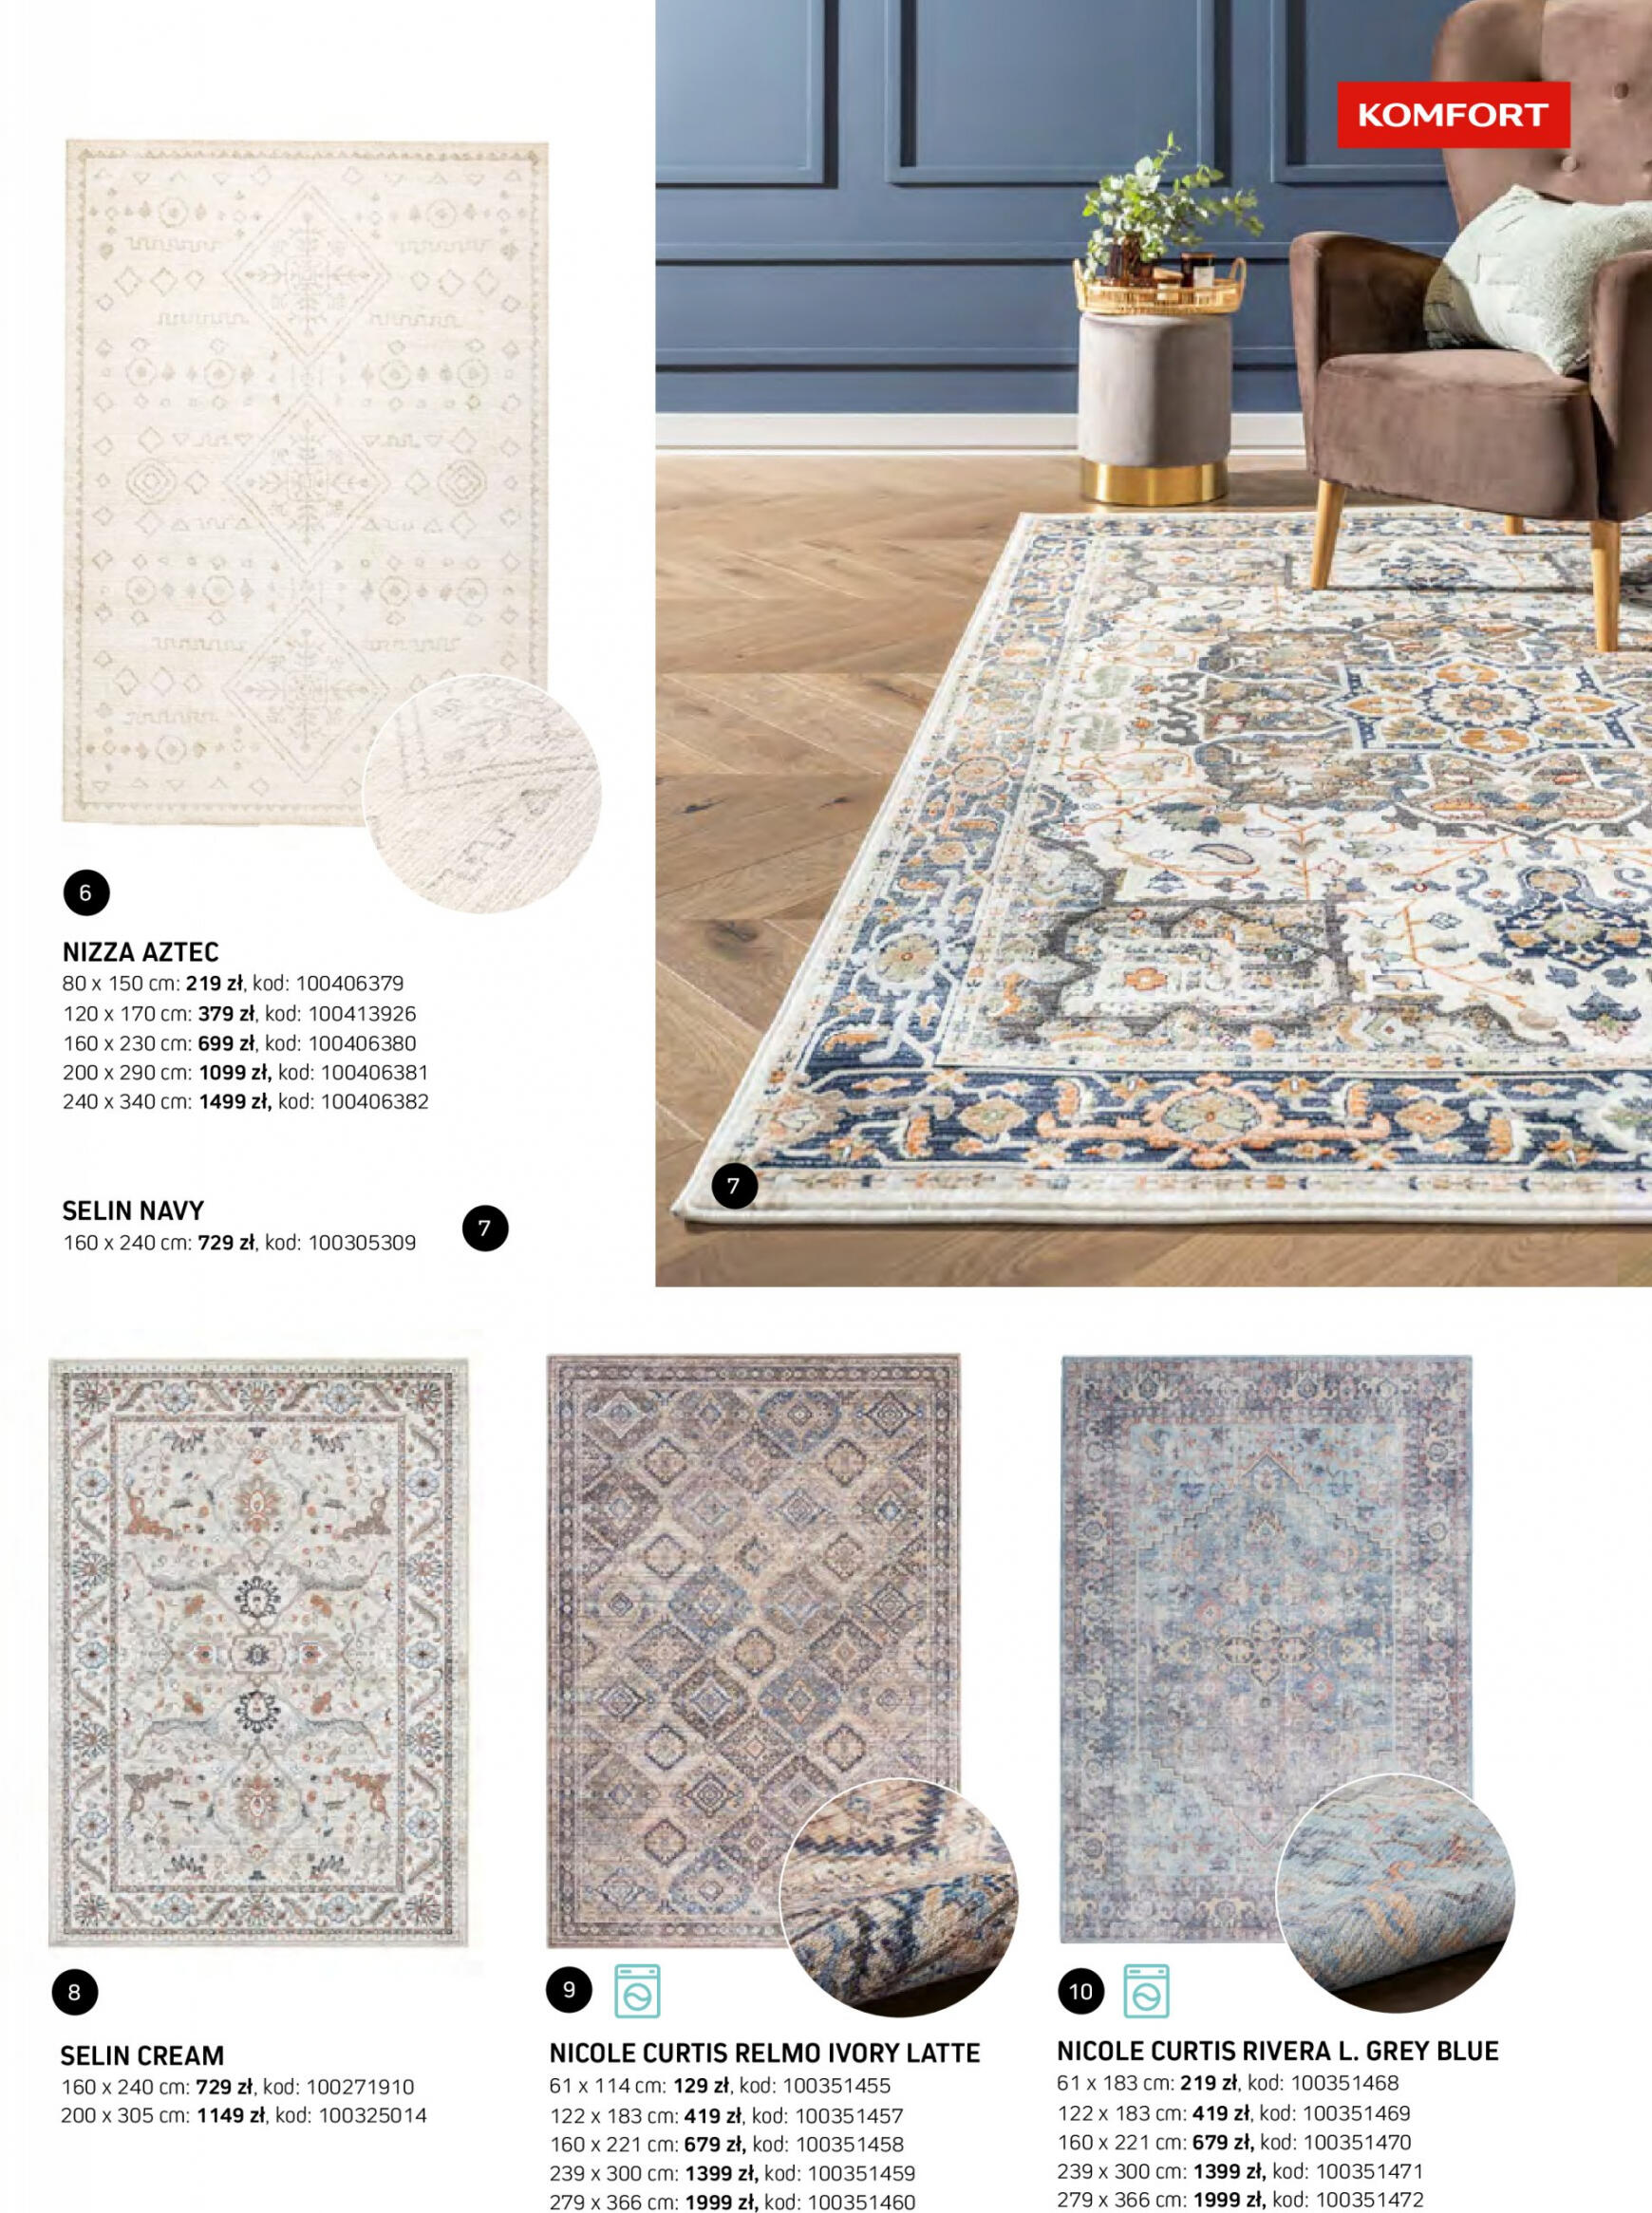 komfort - Komfort - Katalog dywany 2 - page: 13